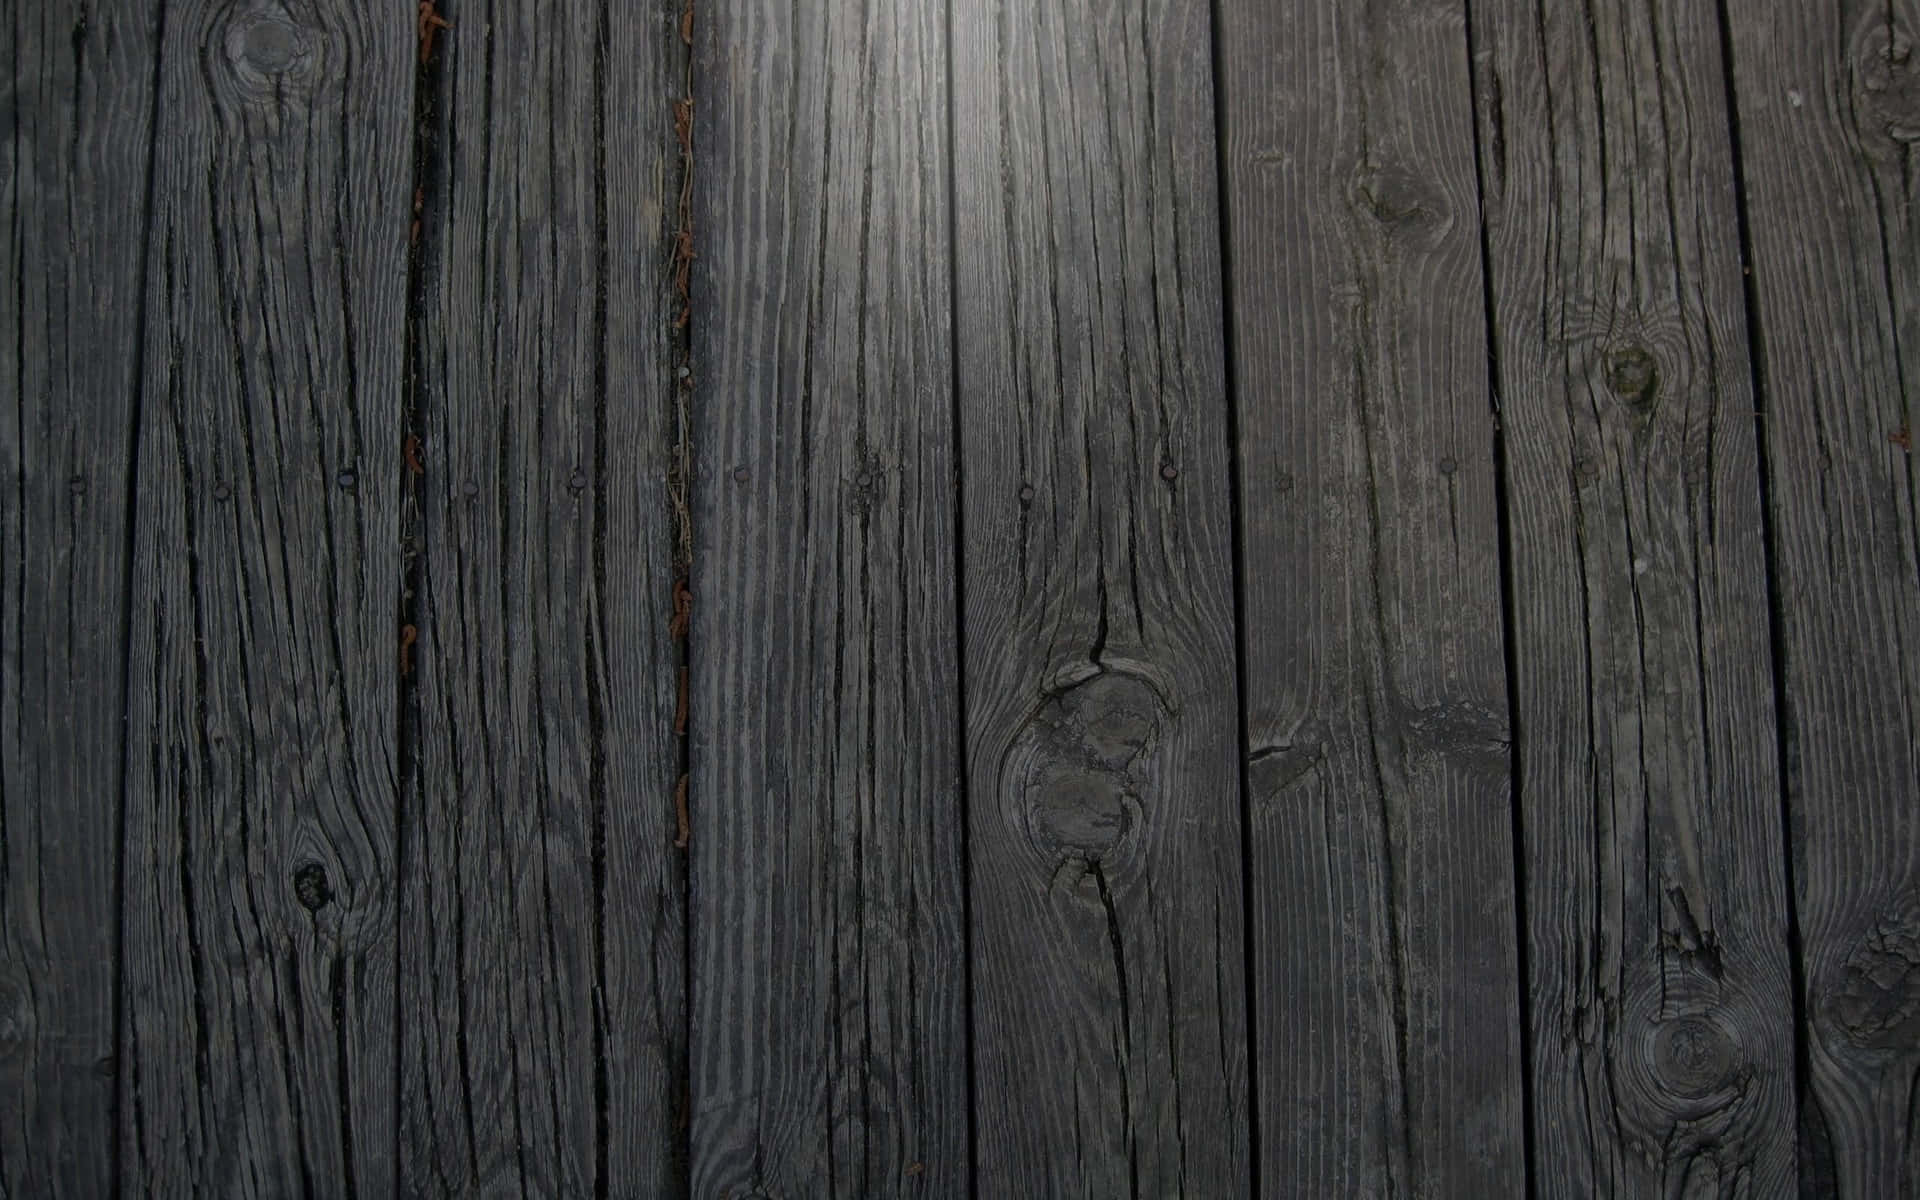 Exquisite Mahogany Wood Texture Background Wallpaper